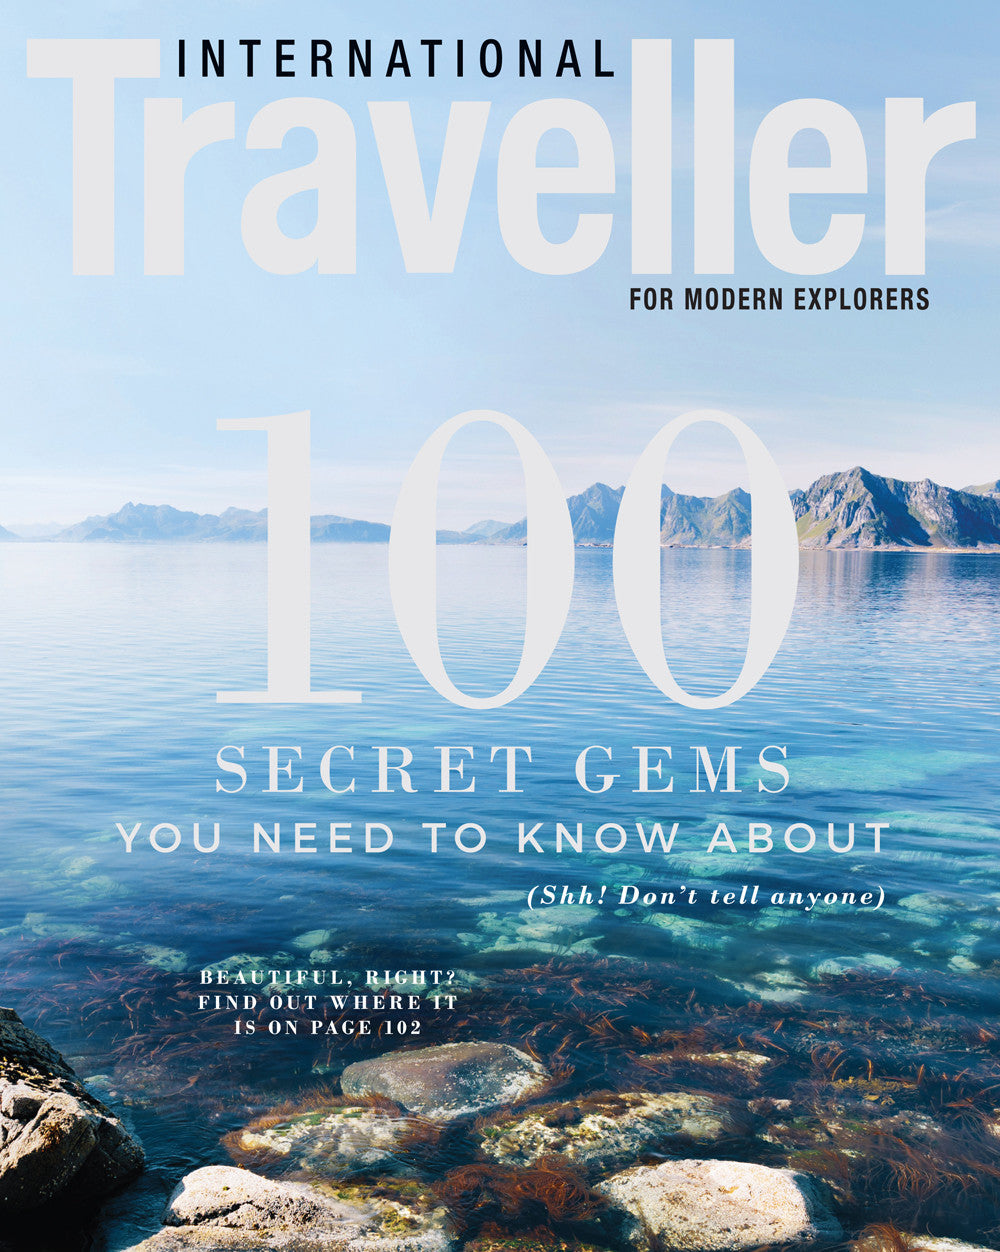 International Traveller Issue 25